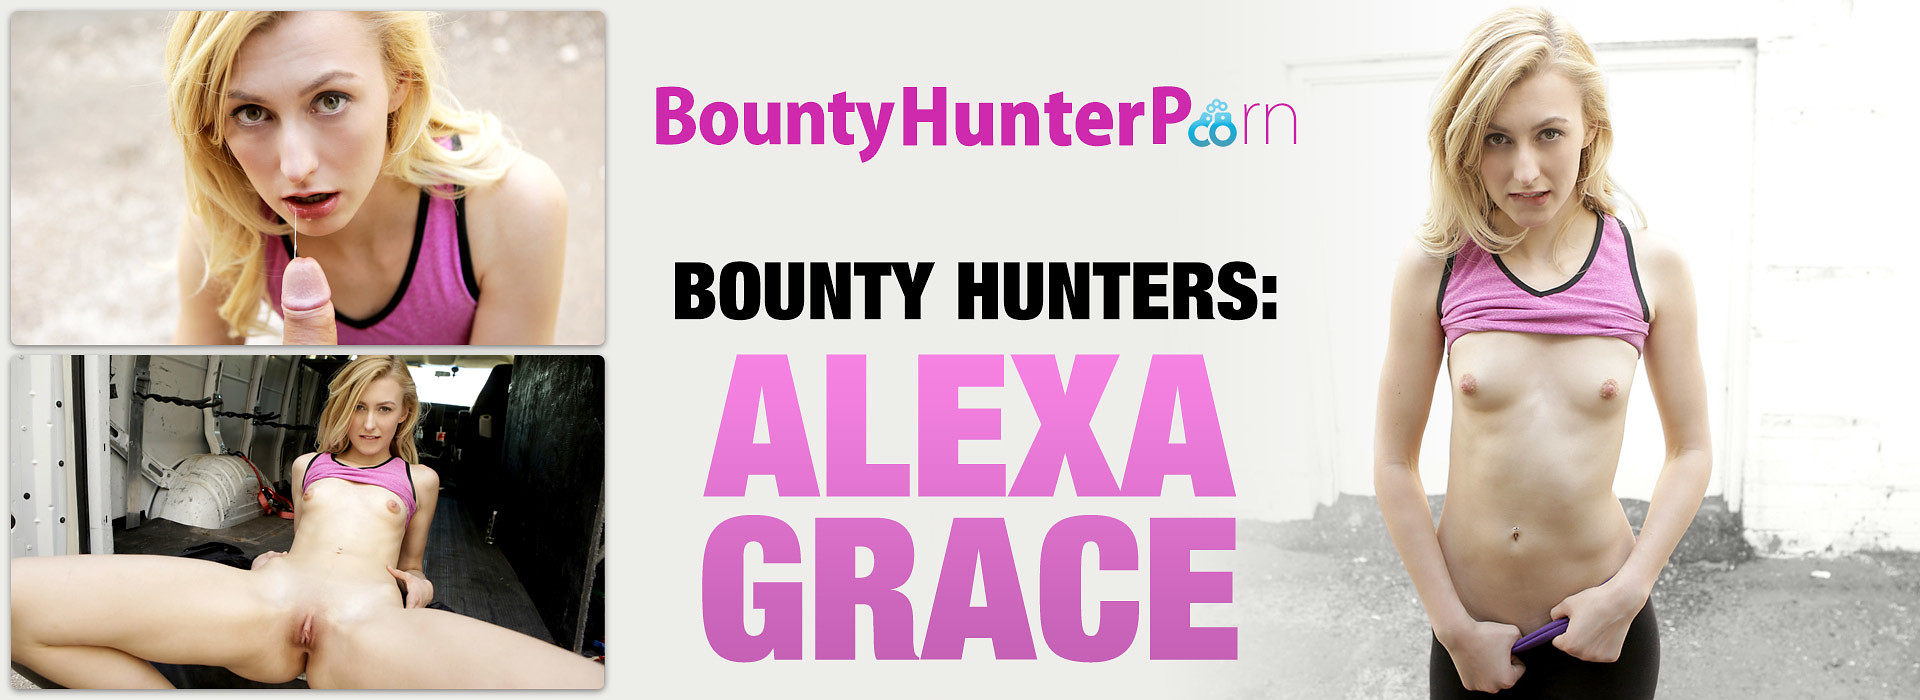 Bounty hunterporn